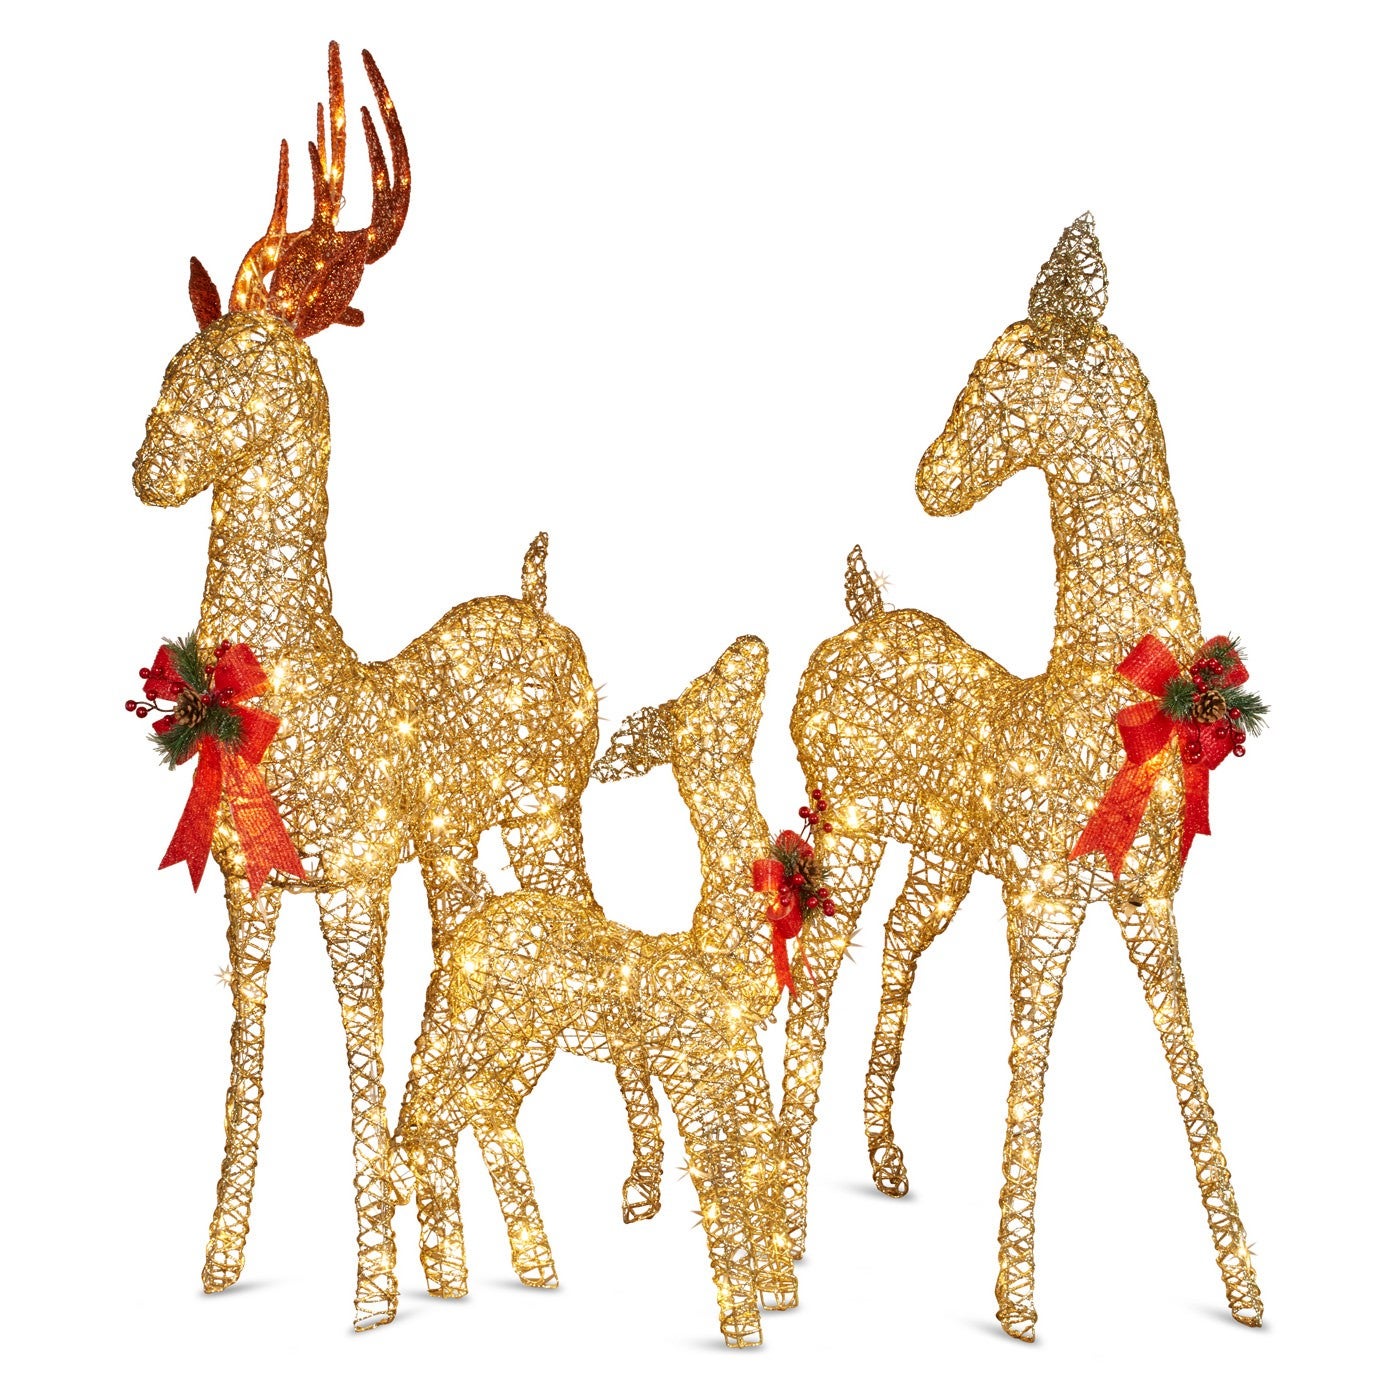 Norjav 3 Piece LED Light Up Outdoor Rattan Christmas Reindeer Family Figurine Set